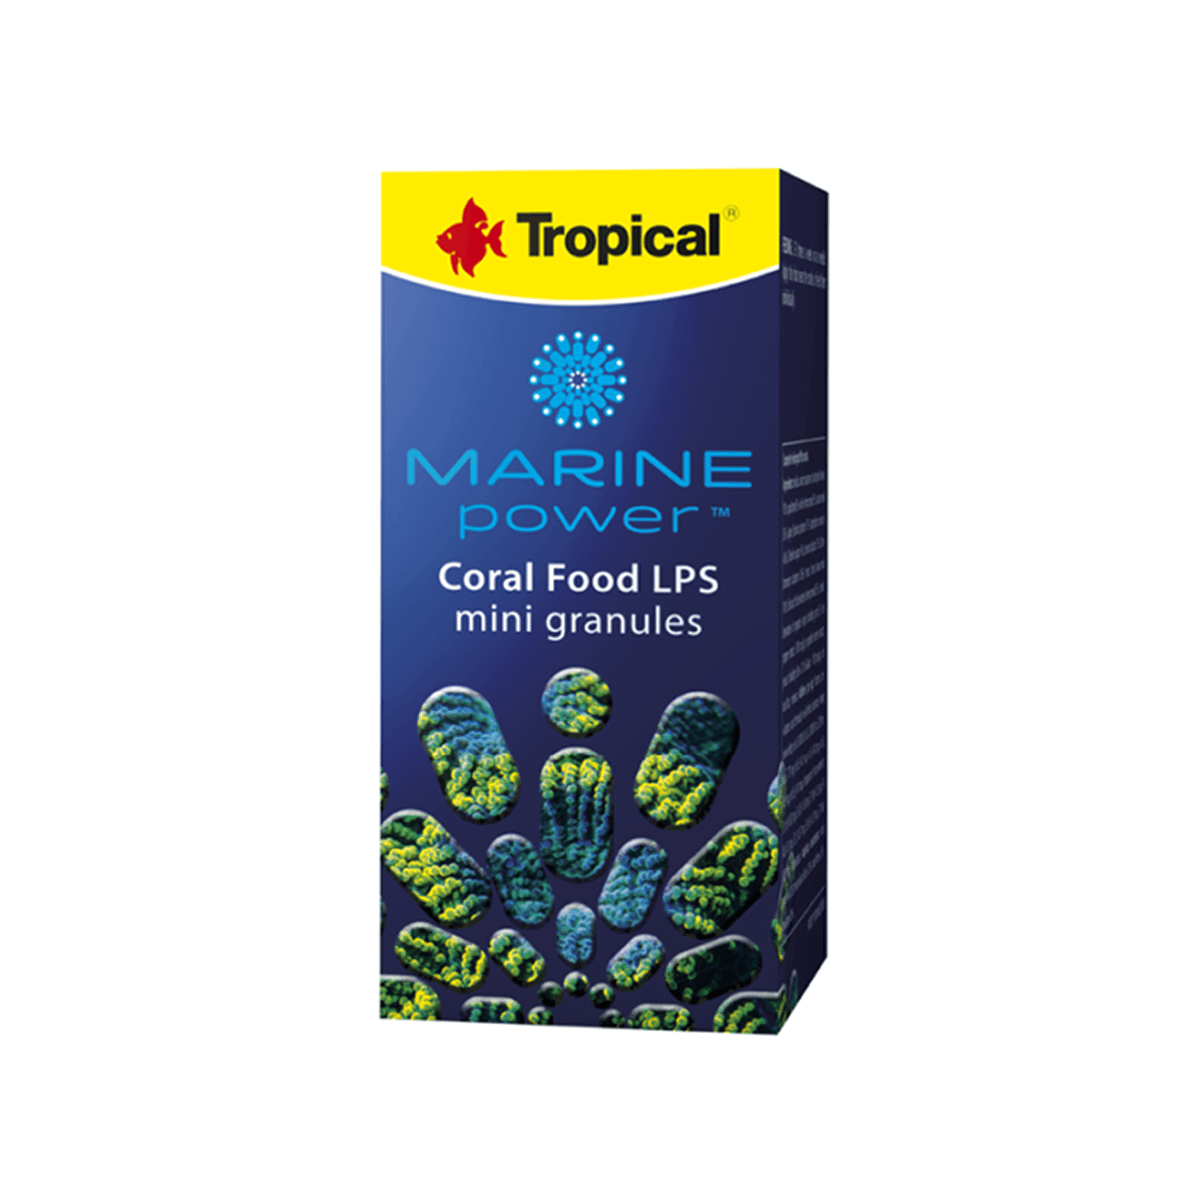 Tropical Marine Power Coral Food LPS Mini Granules 70g